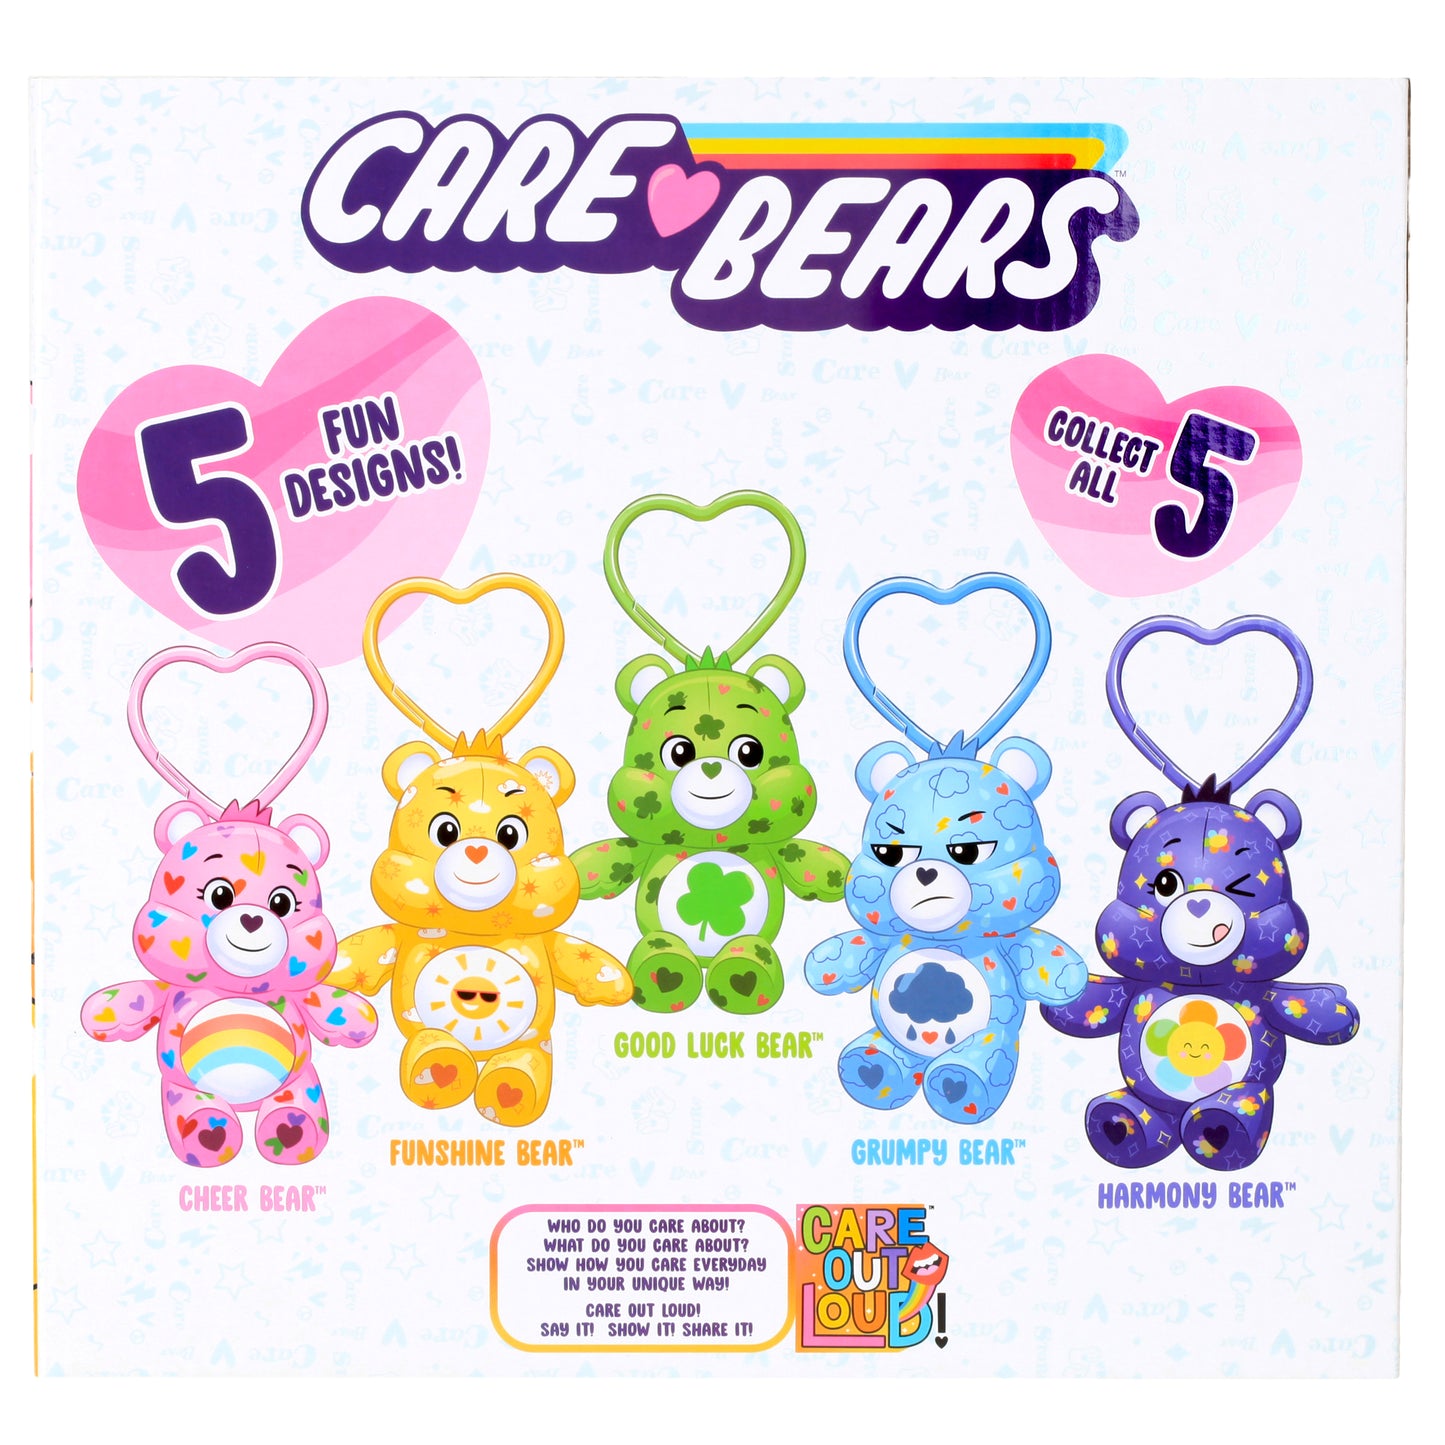 Care bears Grumpy bear dangler